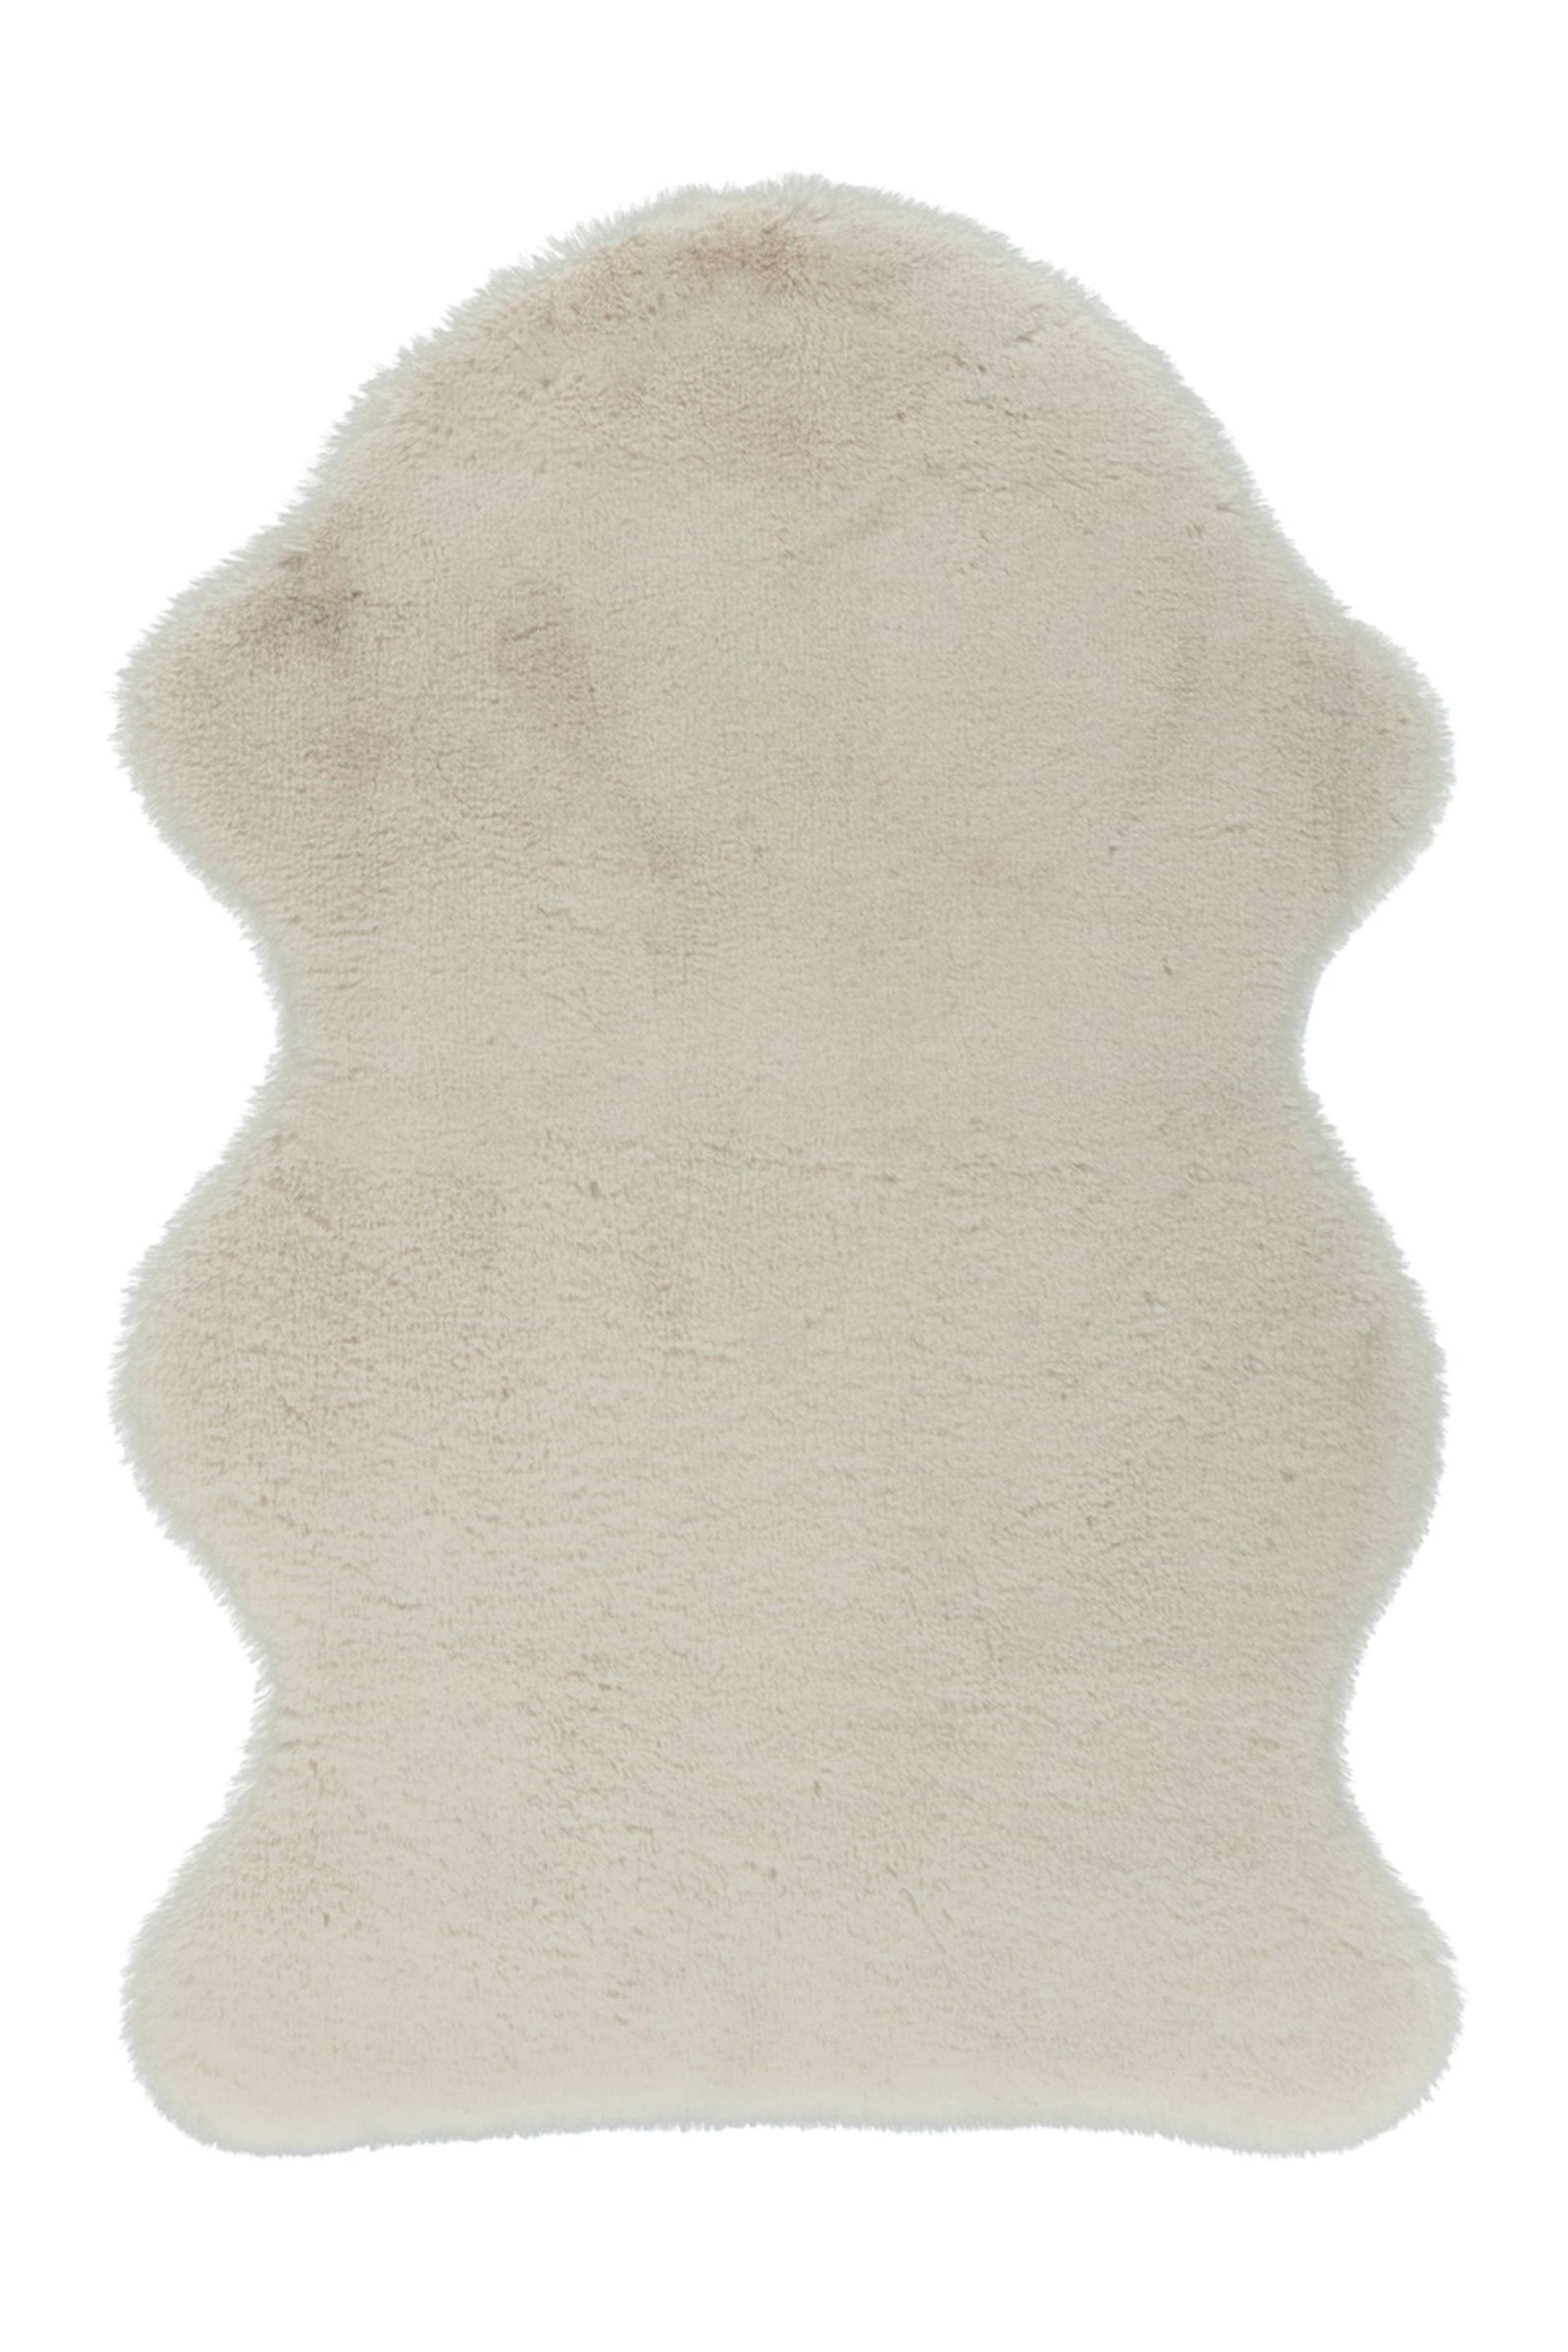 Teppich Estonia - Kunda Elfenbein 60 cm x 90 cm